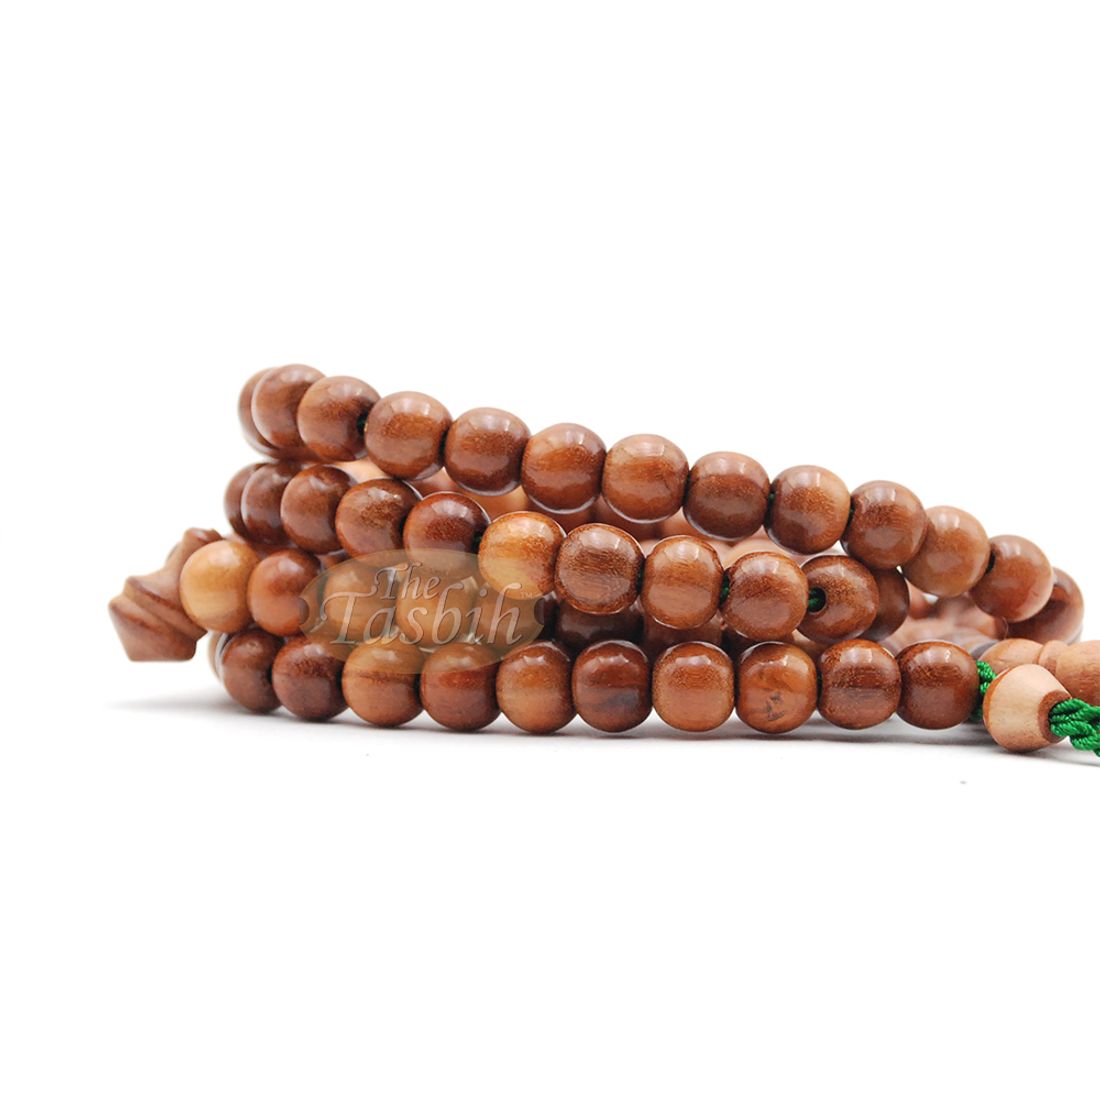 Natural Brown Color 8mm Prayer Beads Citrus Wood Tasbih with Green Tassels